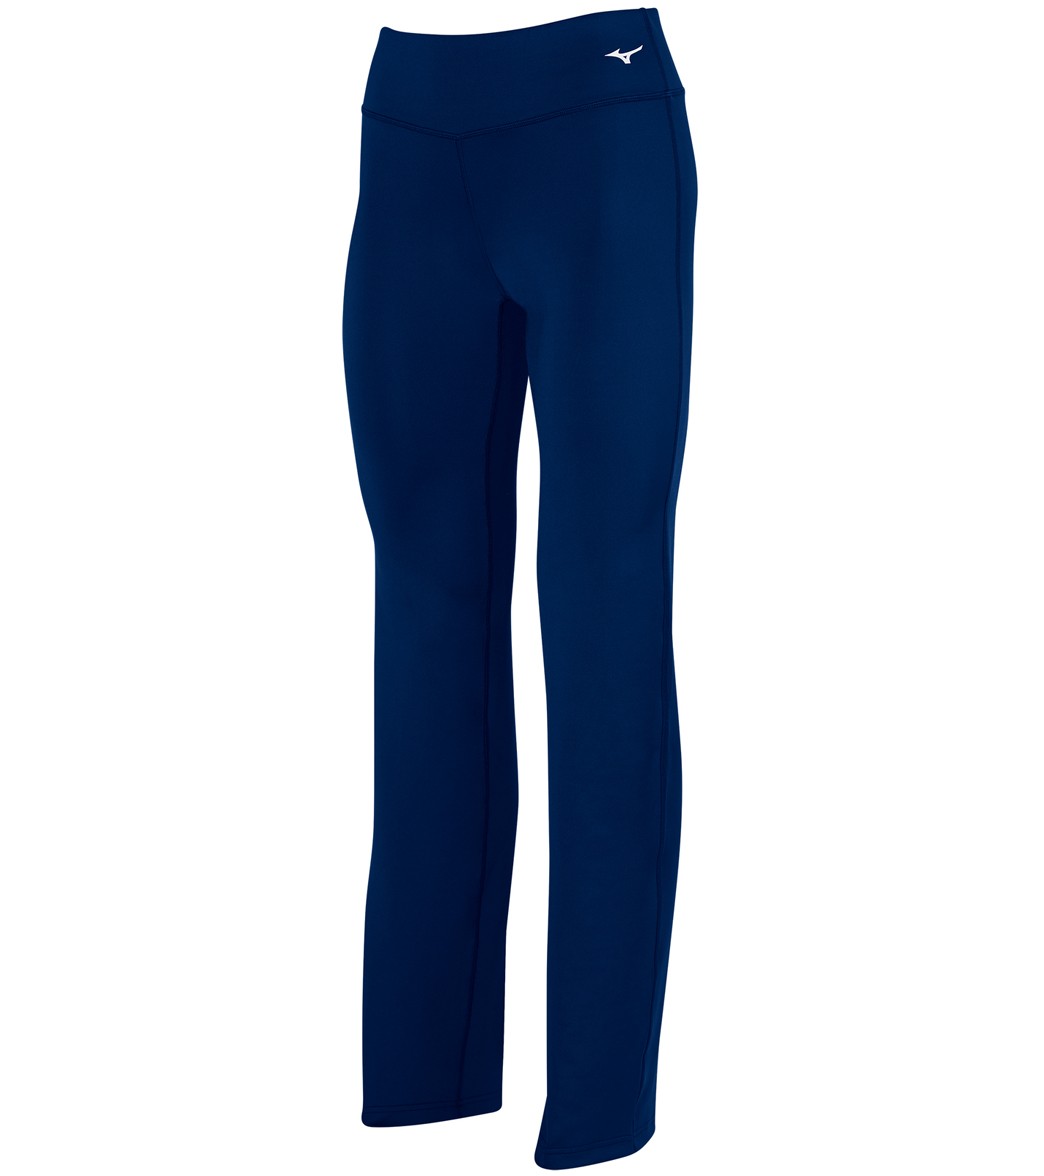 Mizuno Women's Align Long Volleyball Pants - Navy Medium - Swimoutlet.com